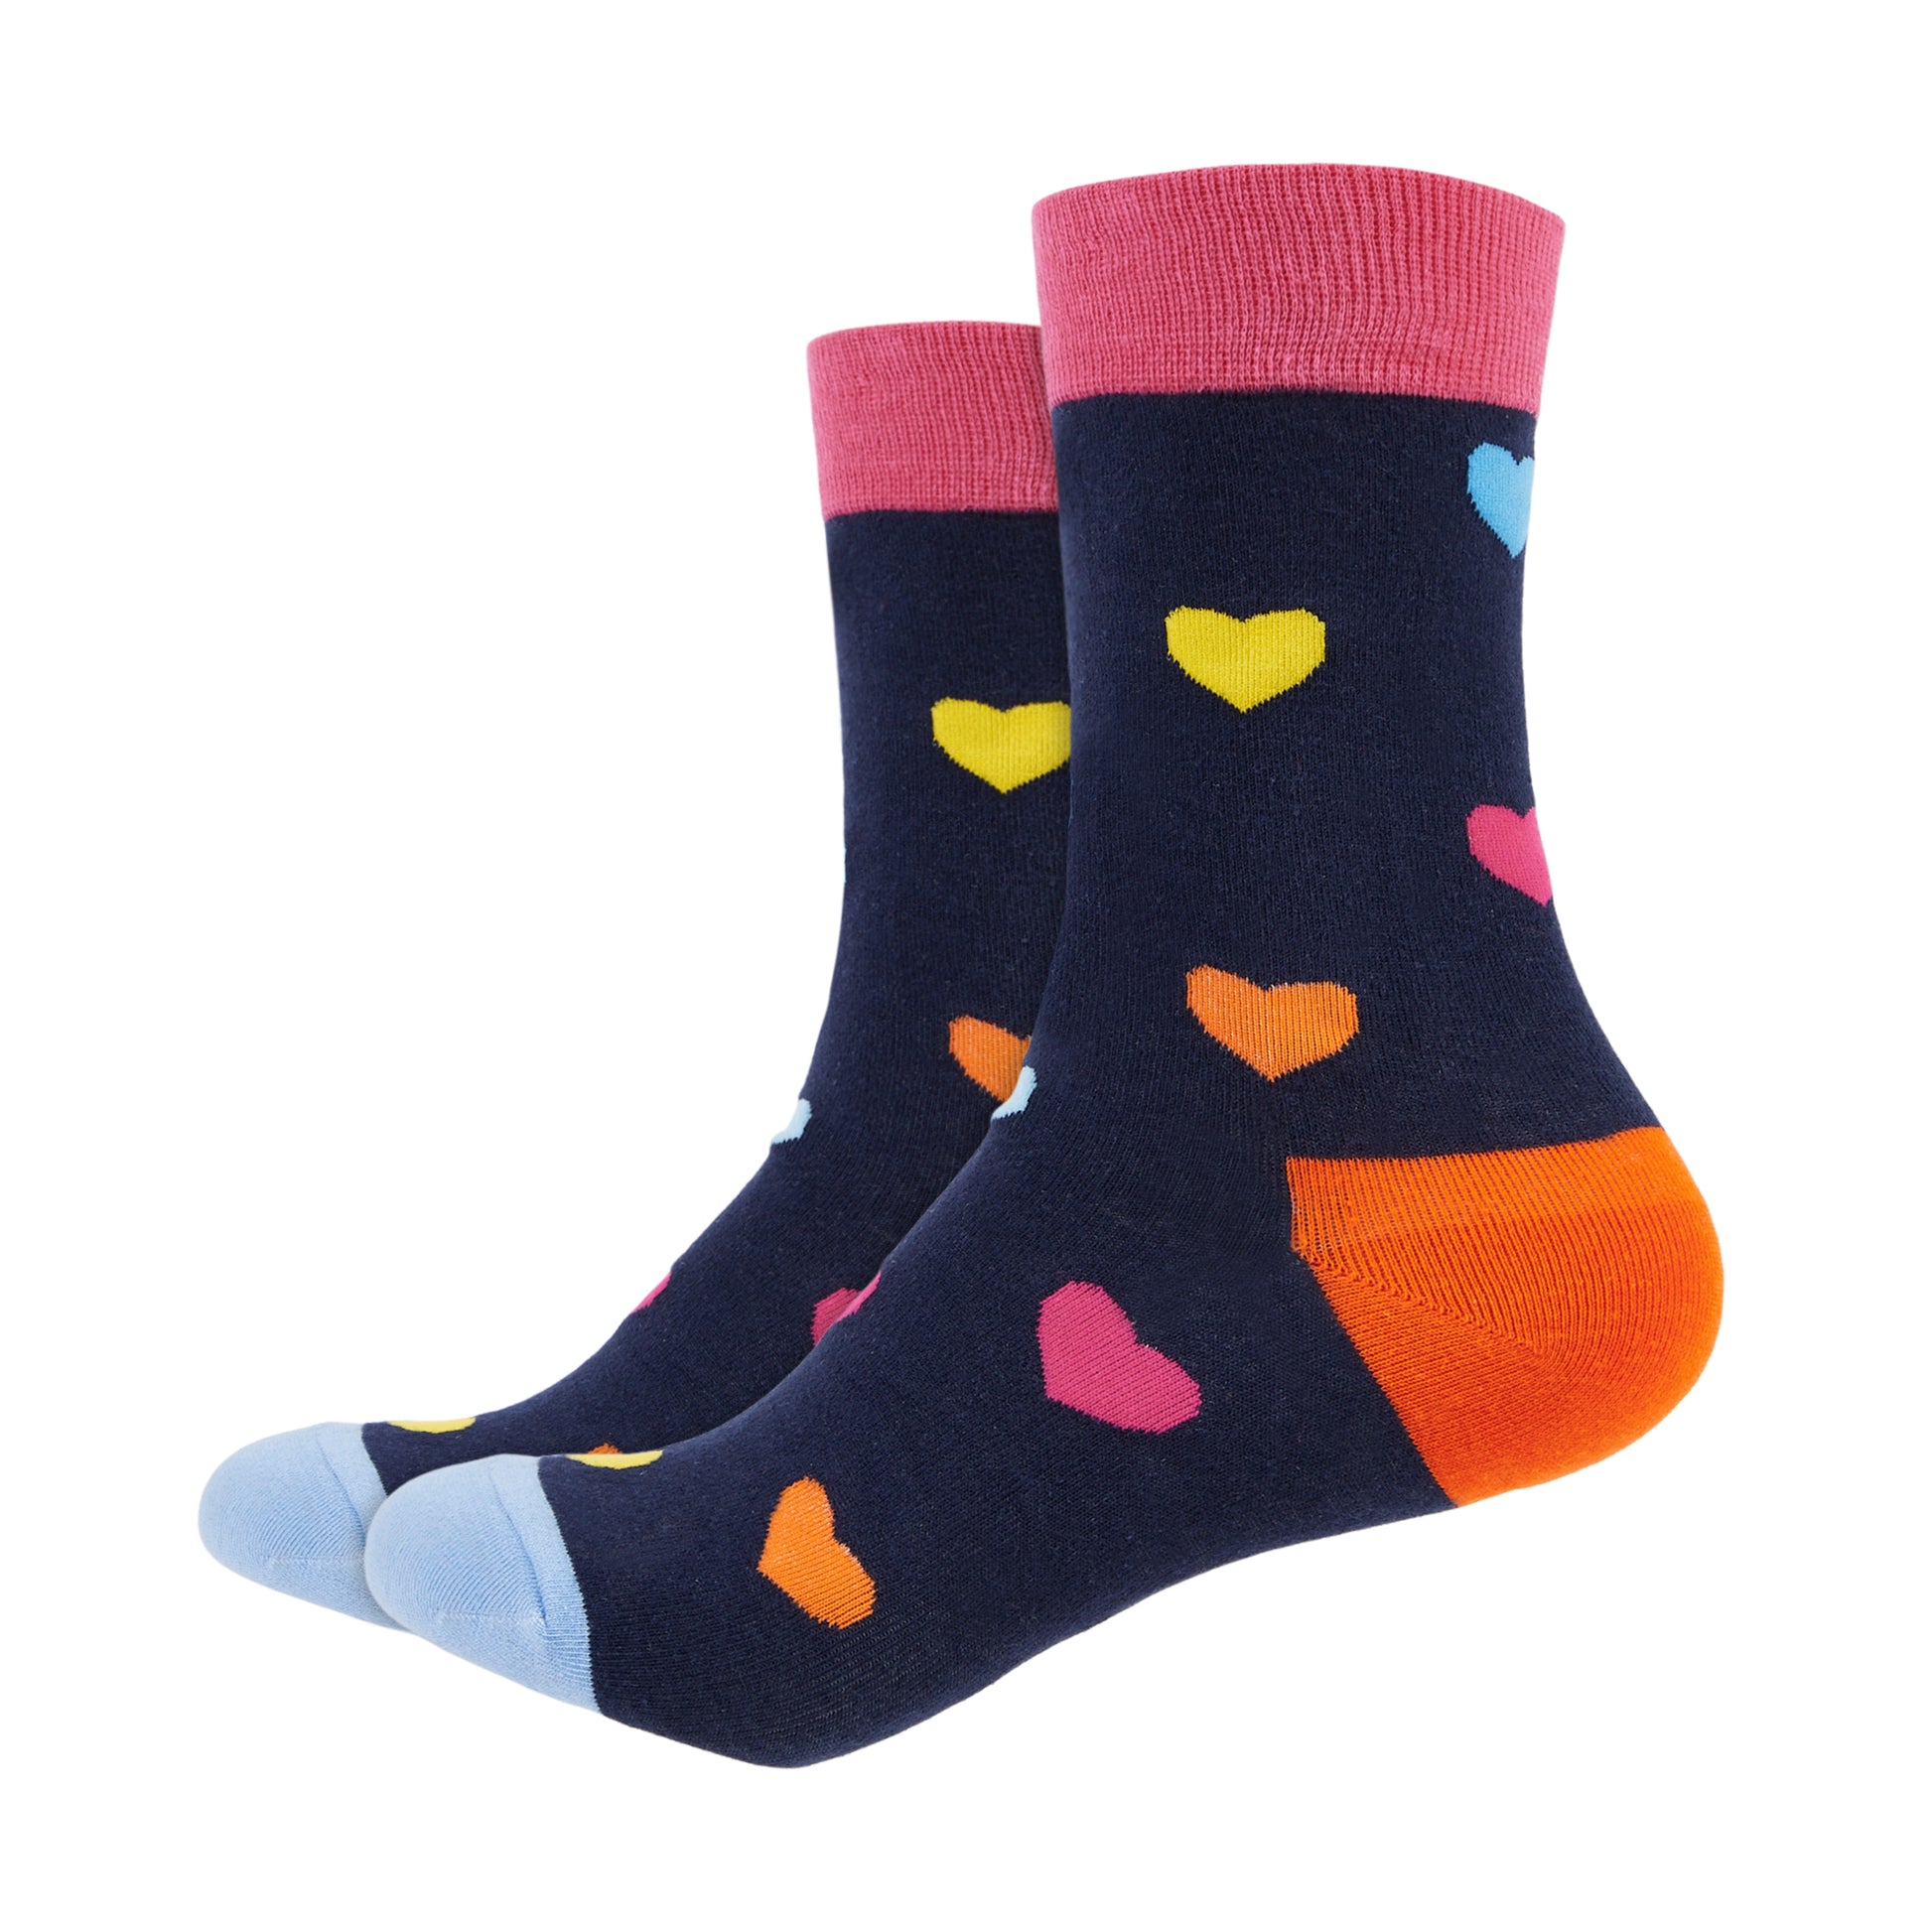 Hearts Printed Crew Length Socks - IDENTITY Apparel Shop